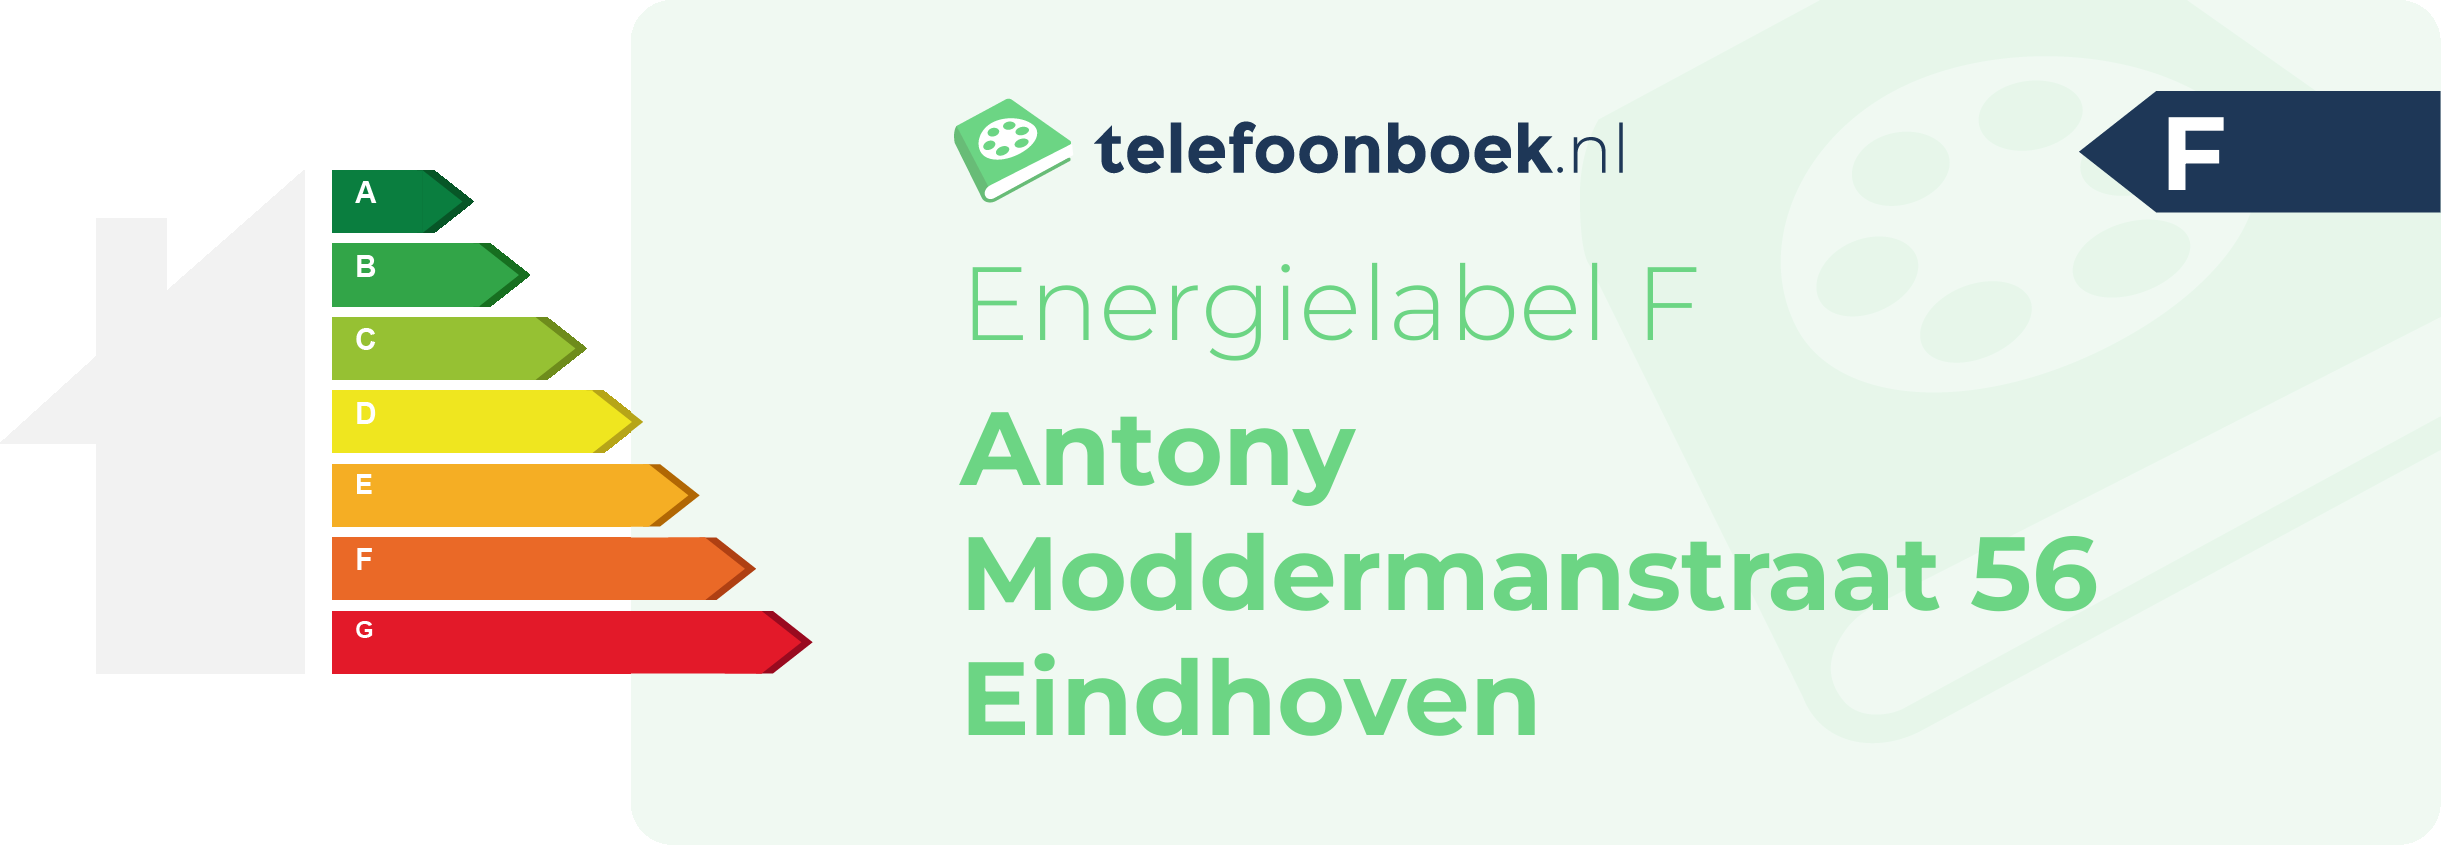 Energielabel Antony Moddermanstraat 56 Eindhoven